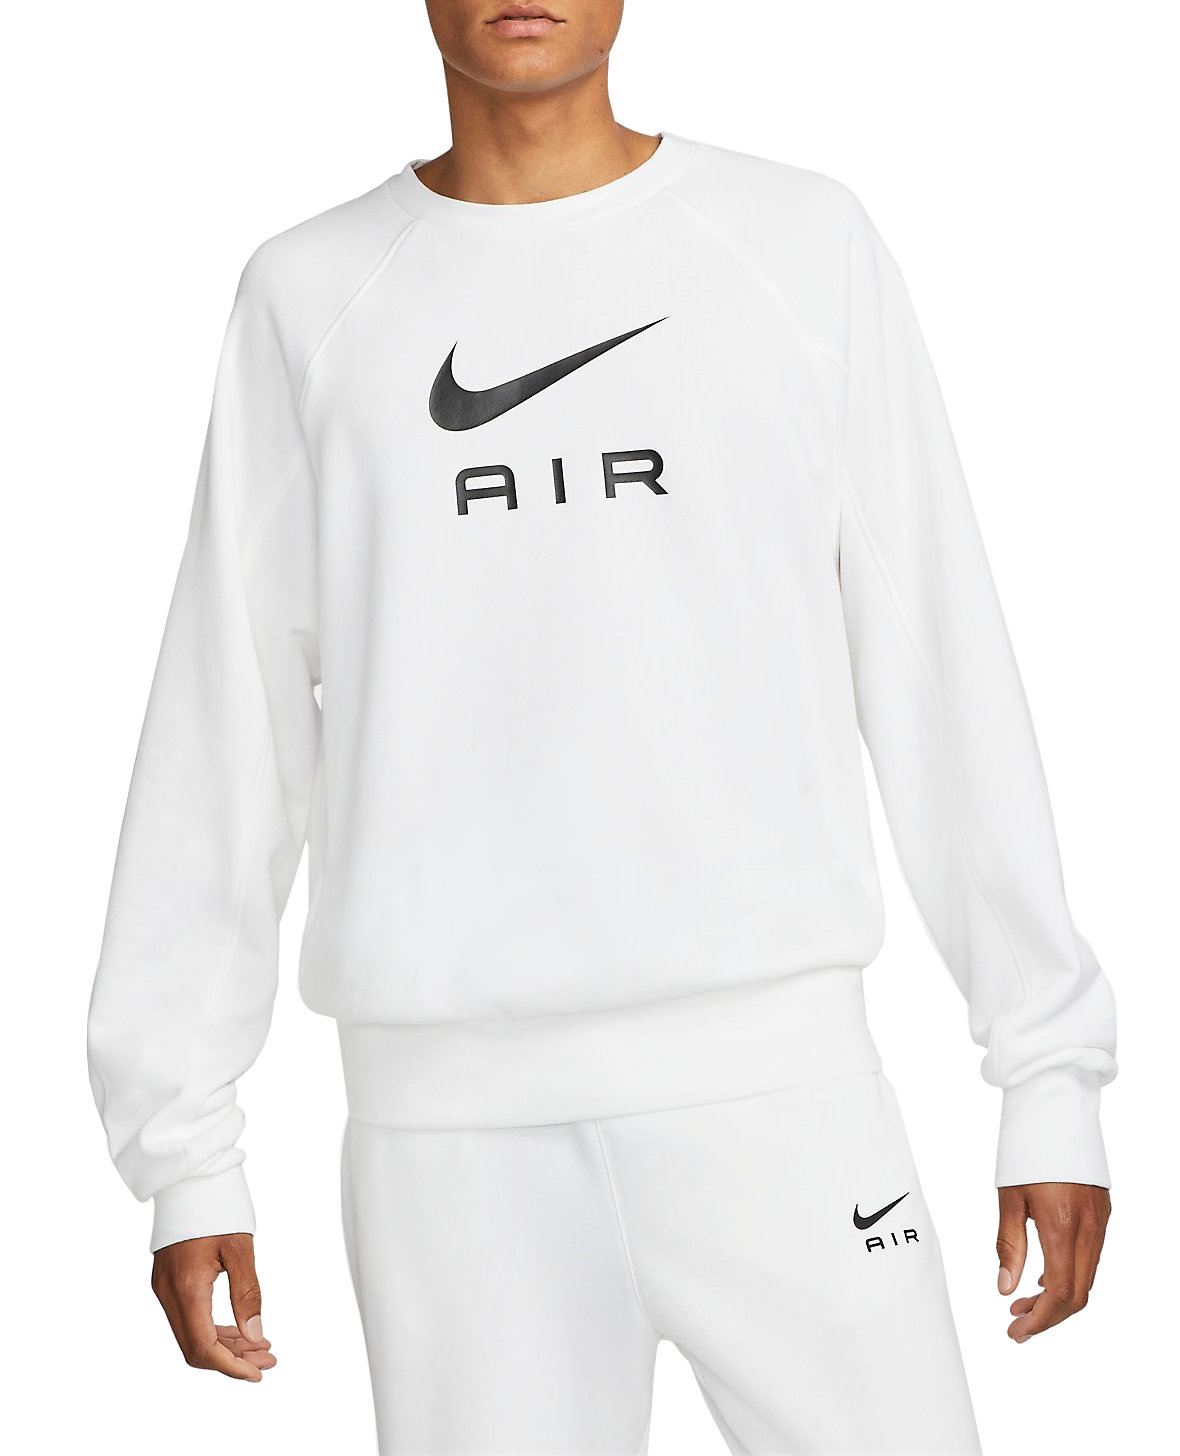 Nike Air FT Crew Sweatshirt